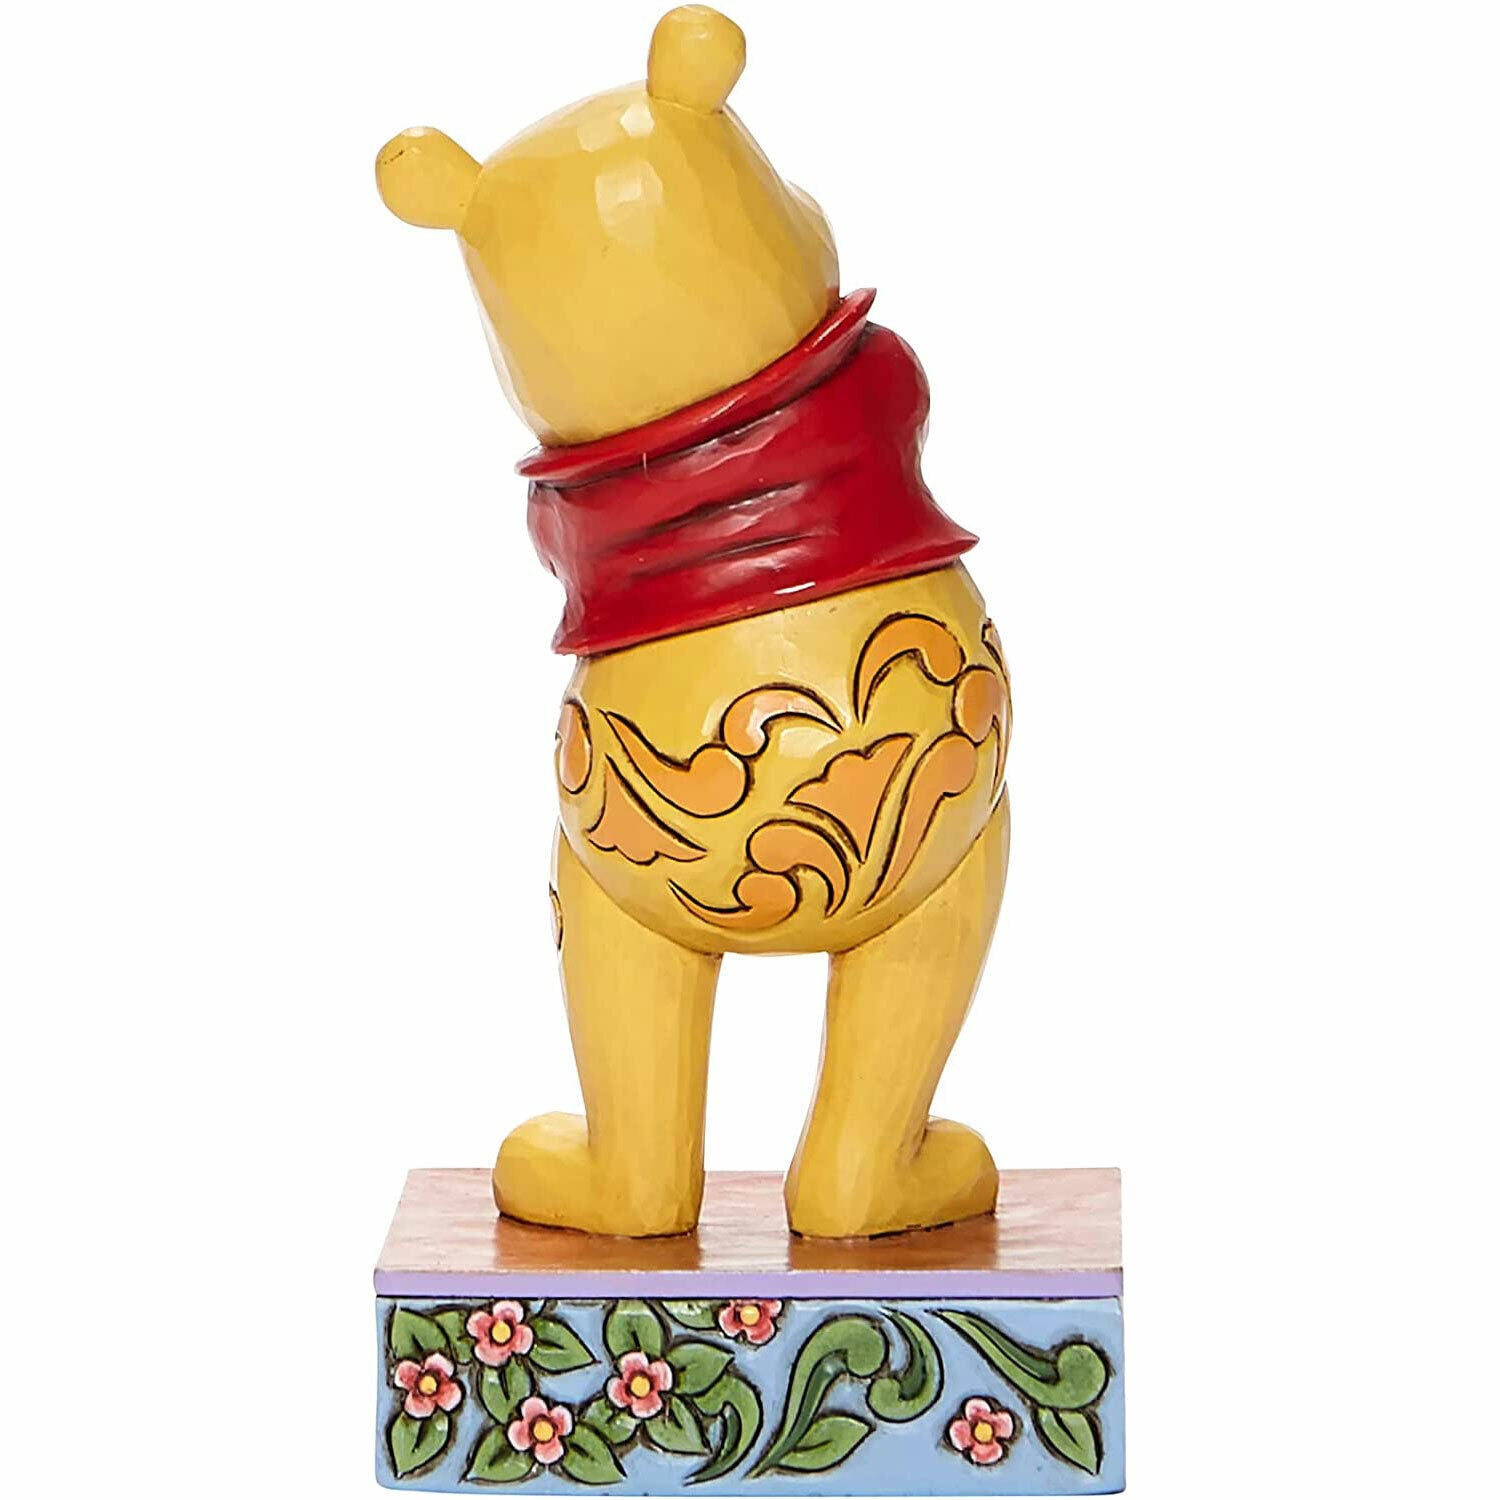 New Disney Traditions Beloved Bear Figurine - Winnie the Pooh